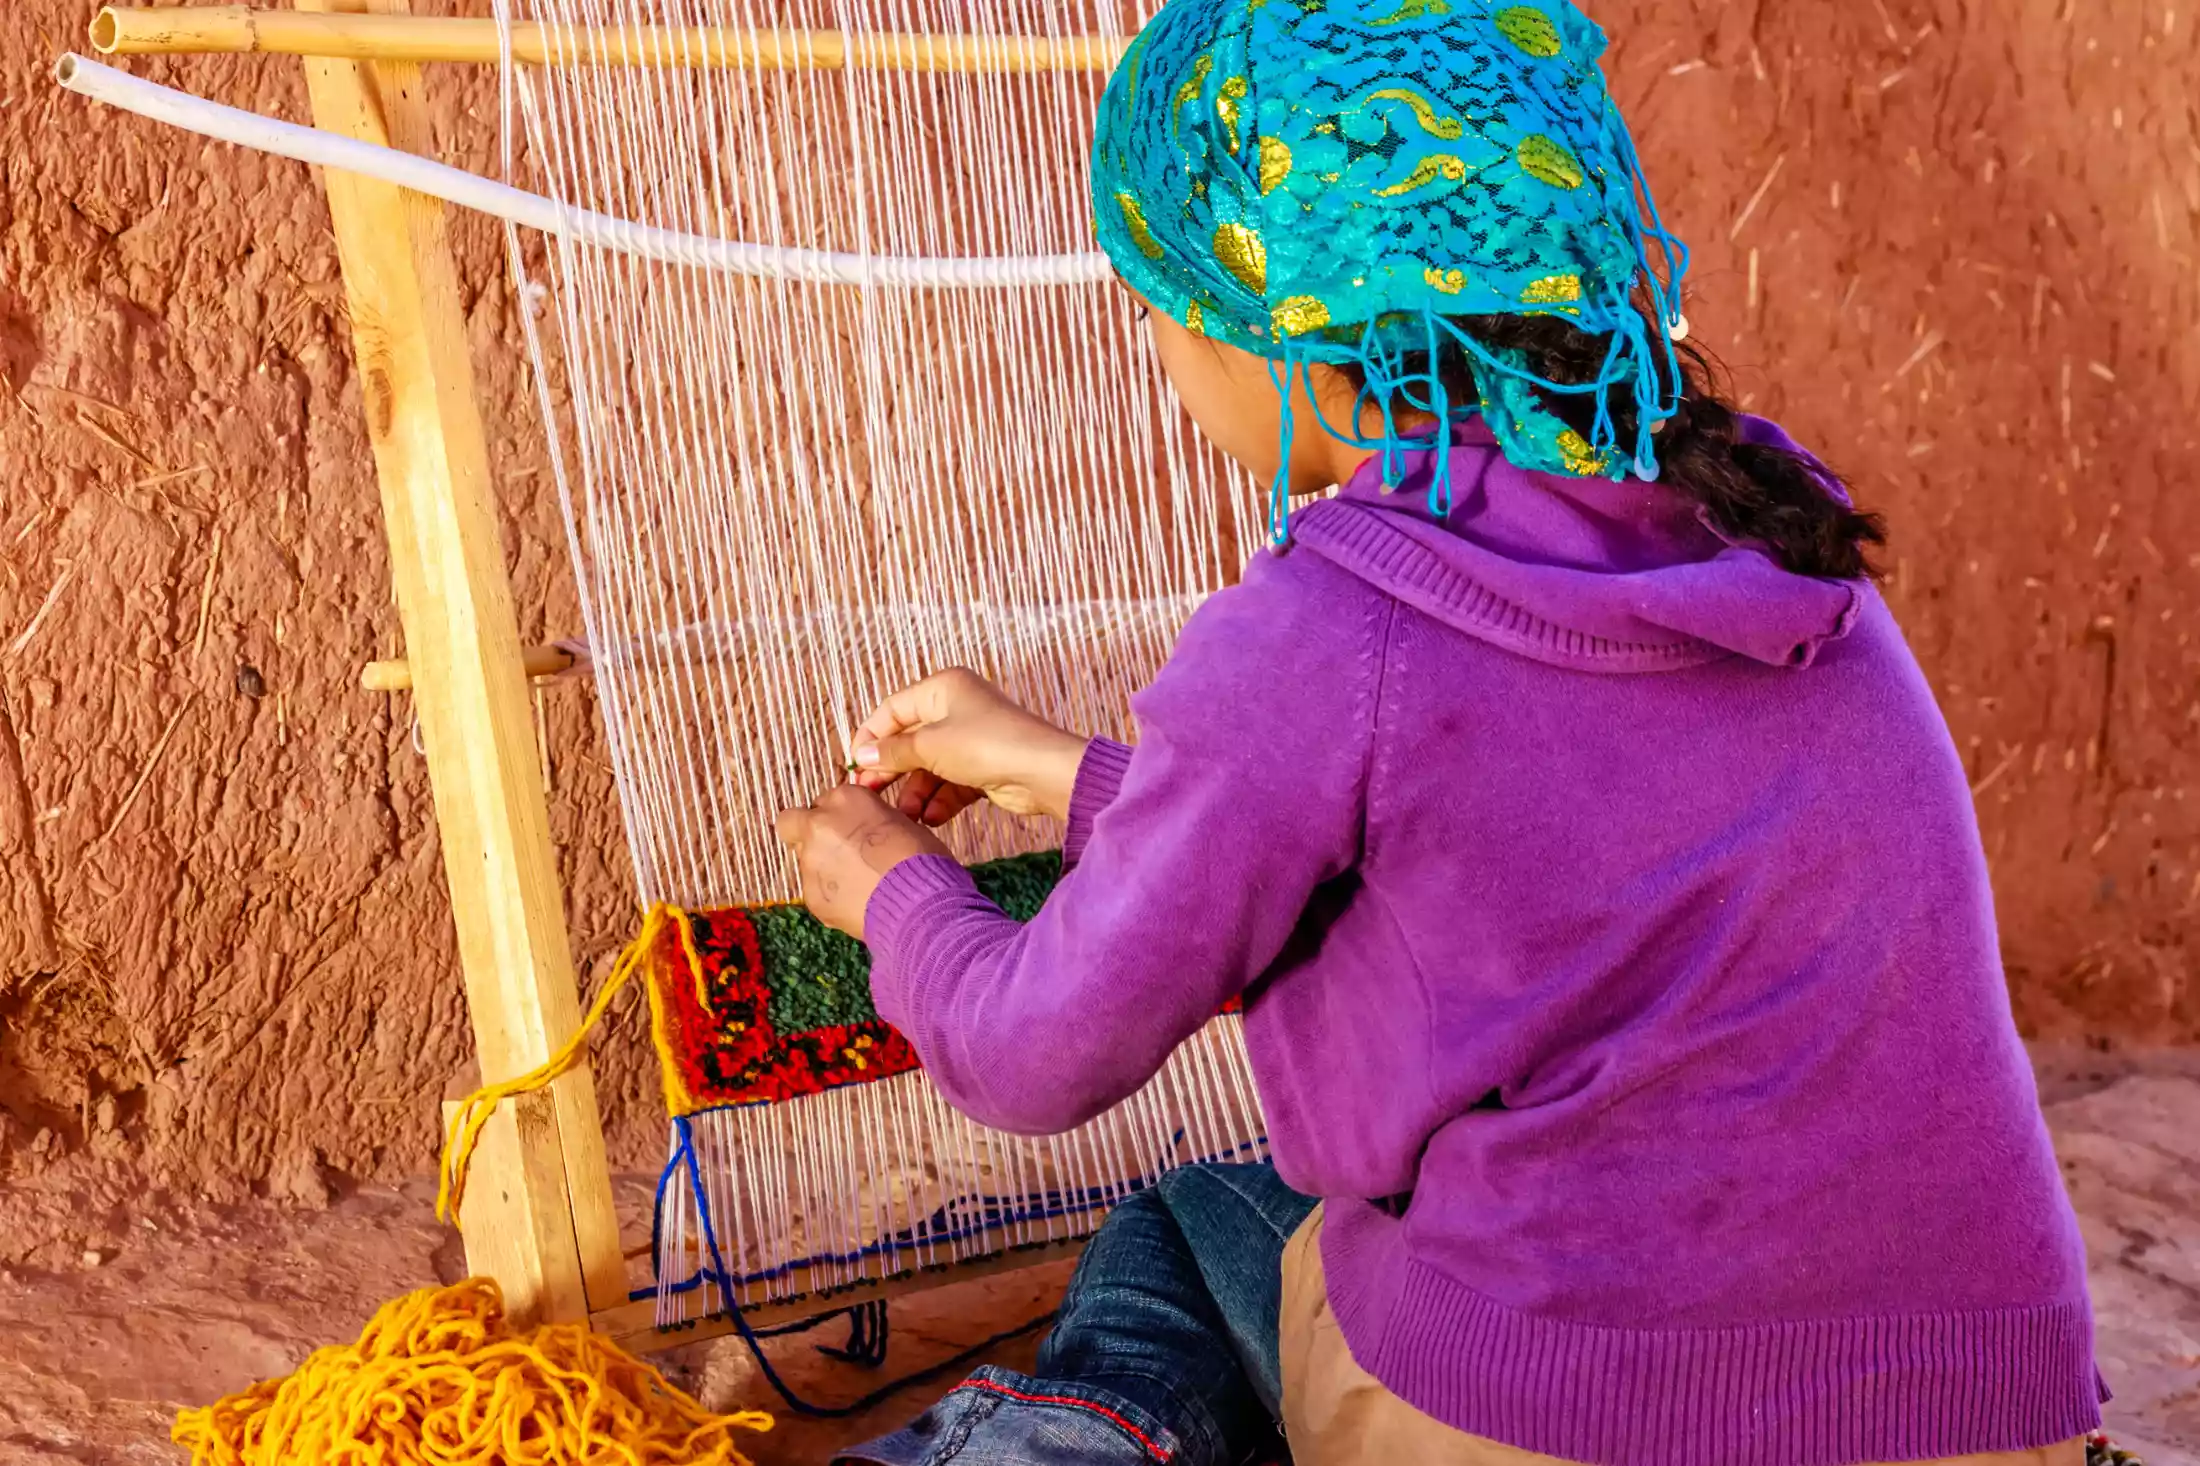 Young Berber girl weaving textiles in Morocco.